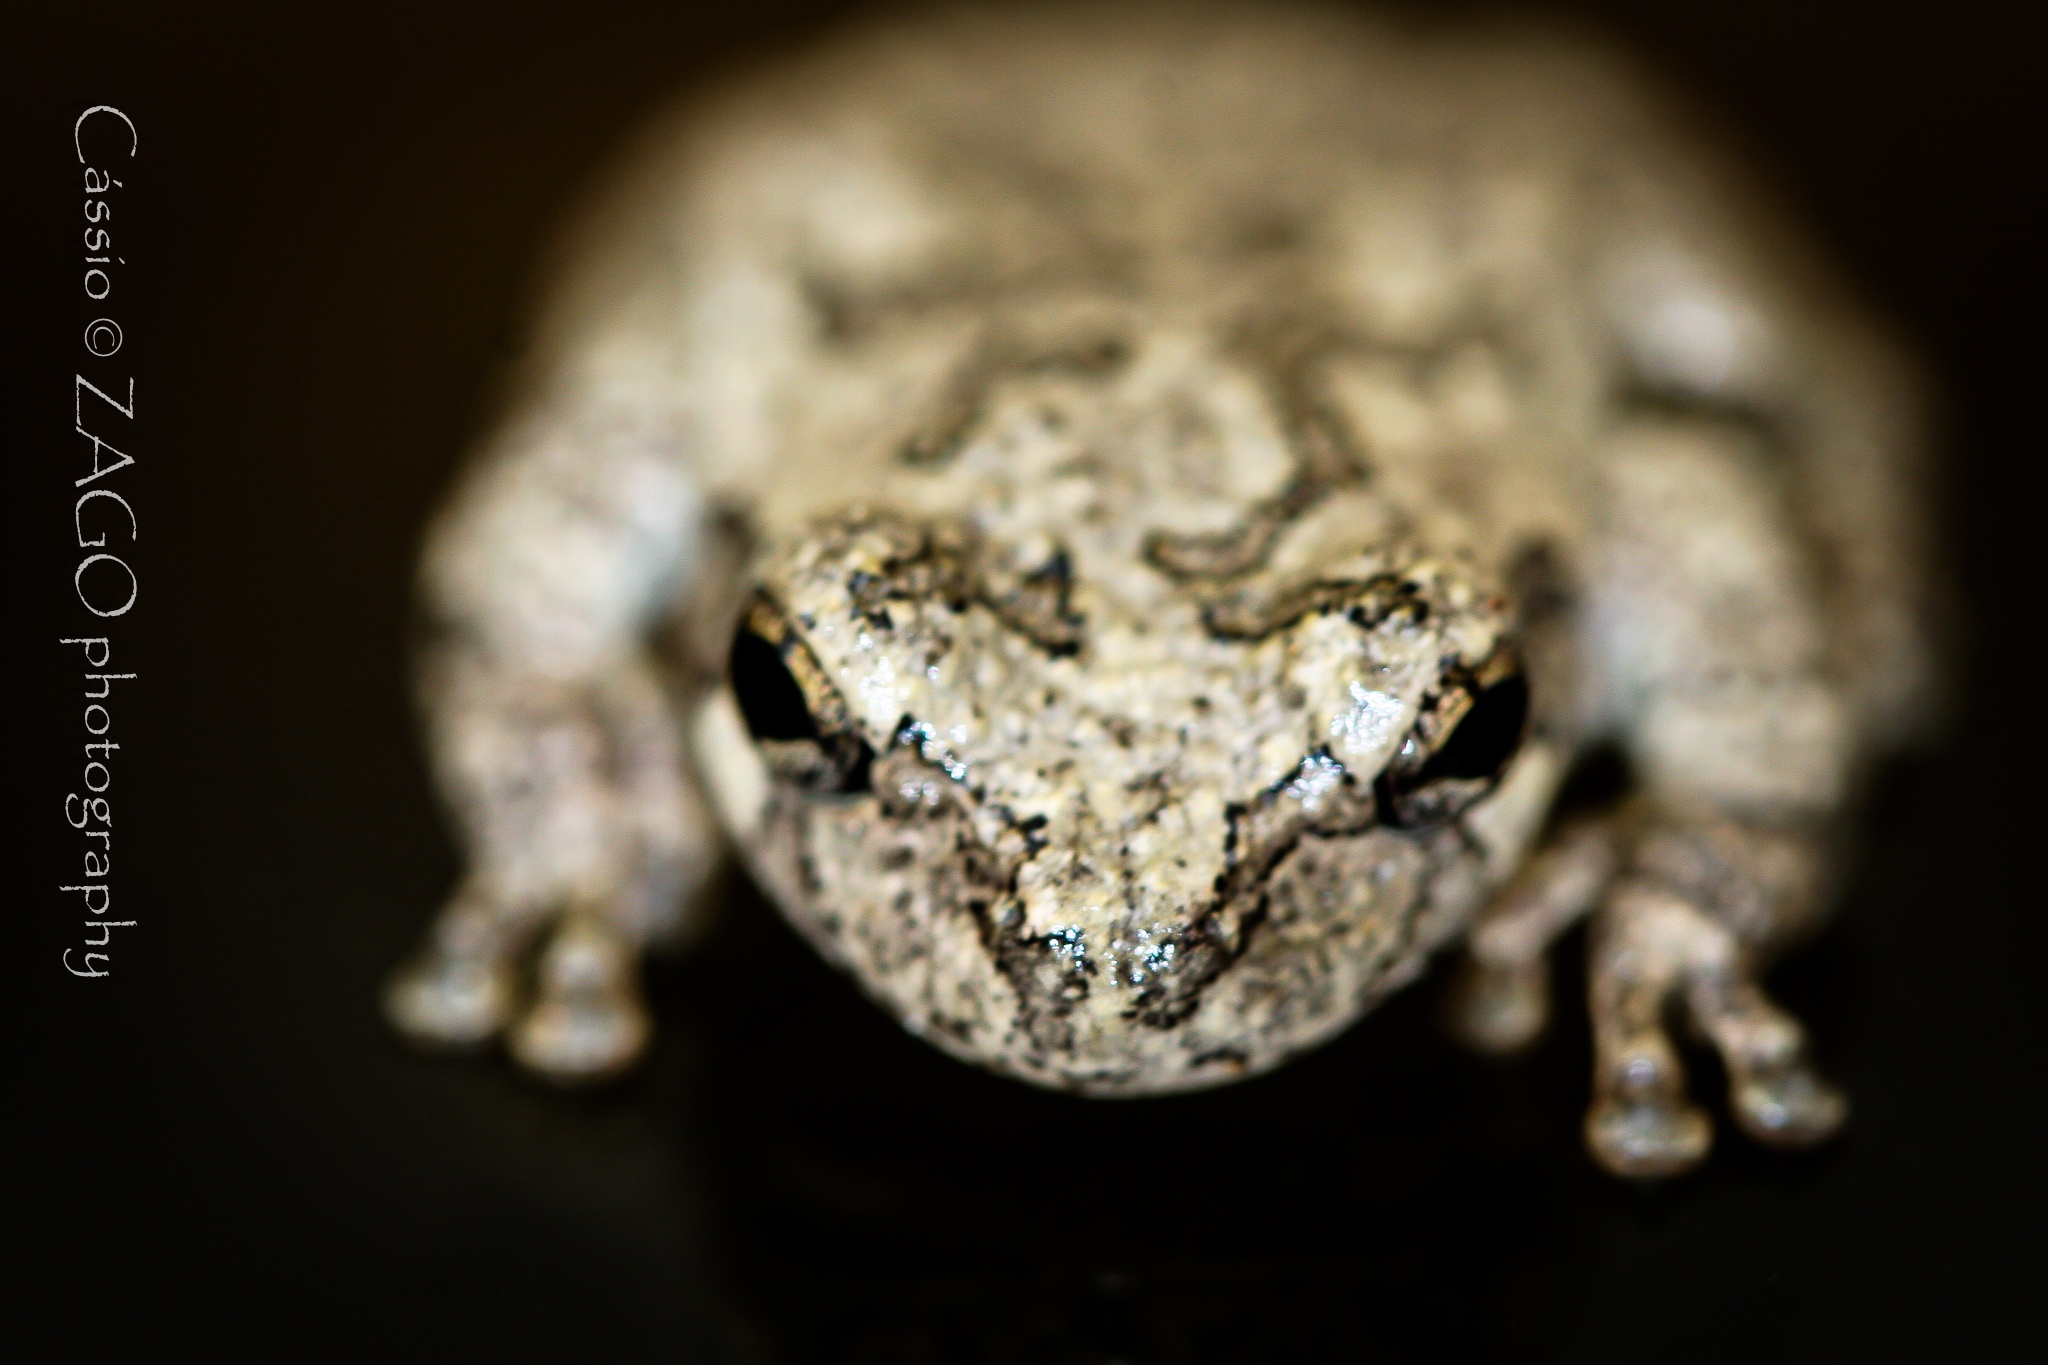 Frog-3.jpg